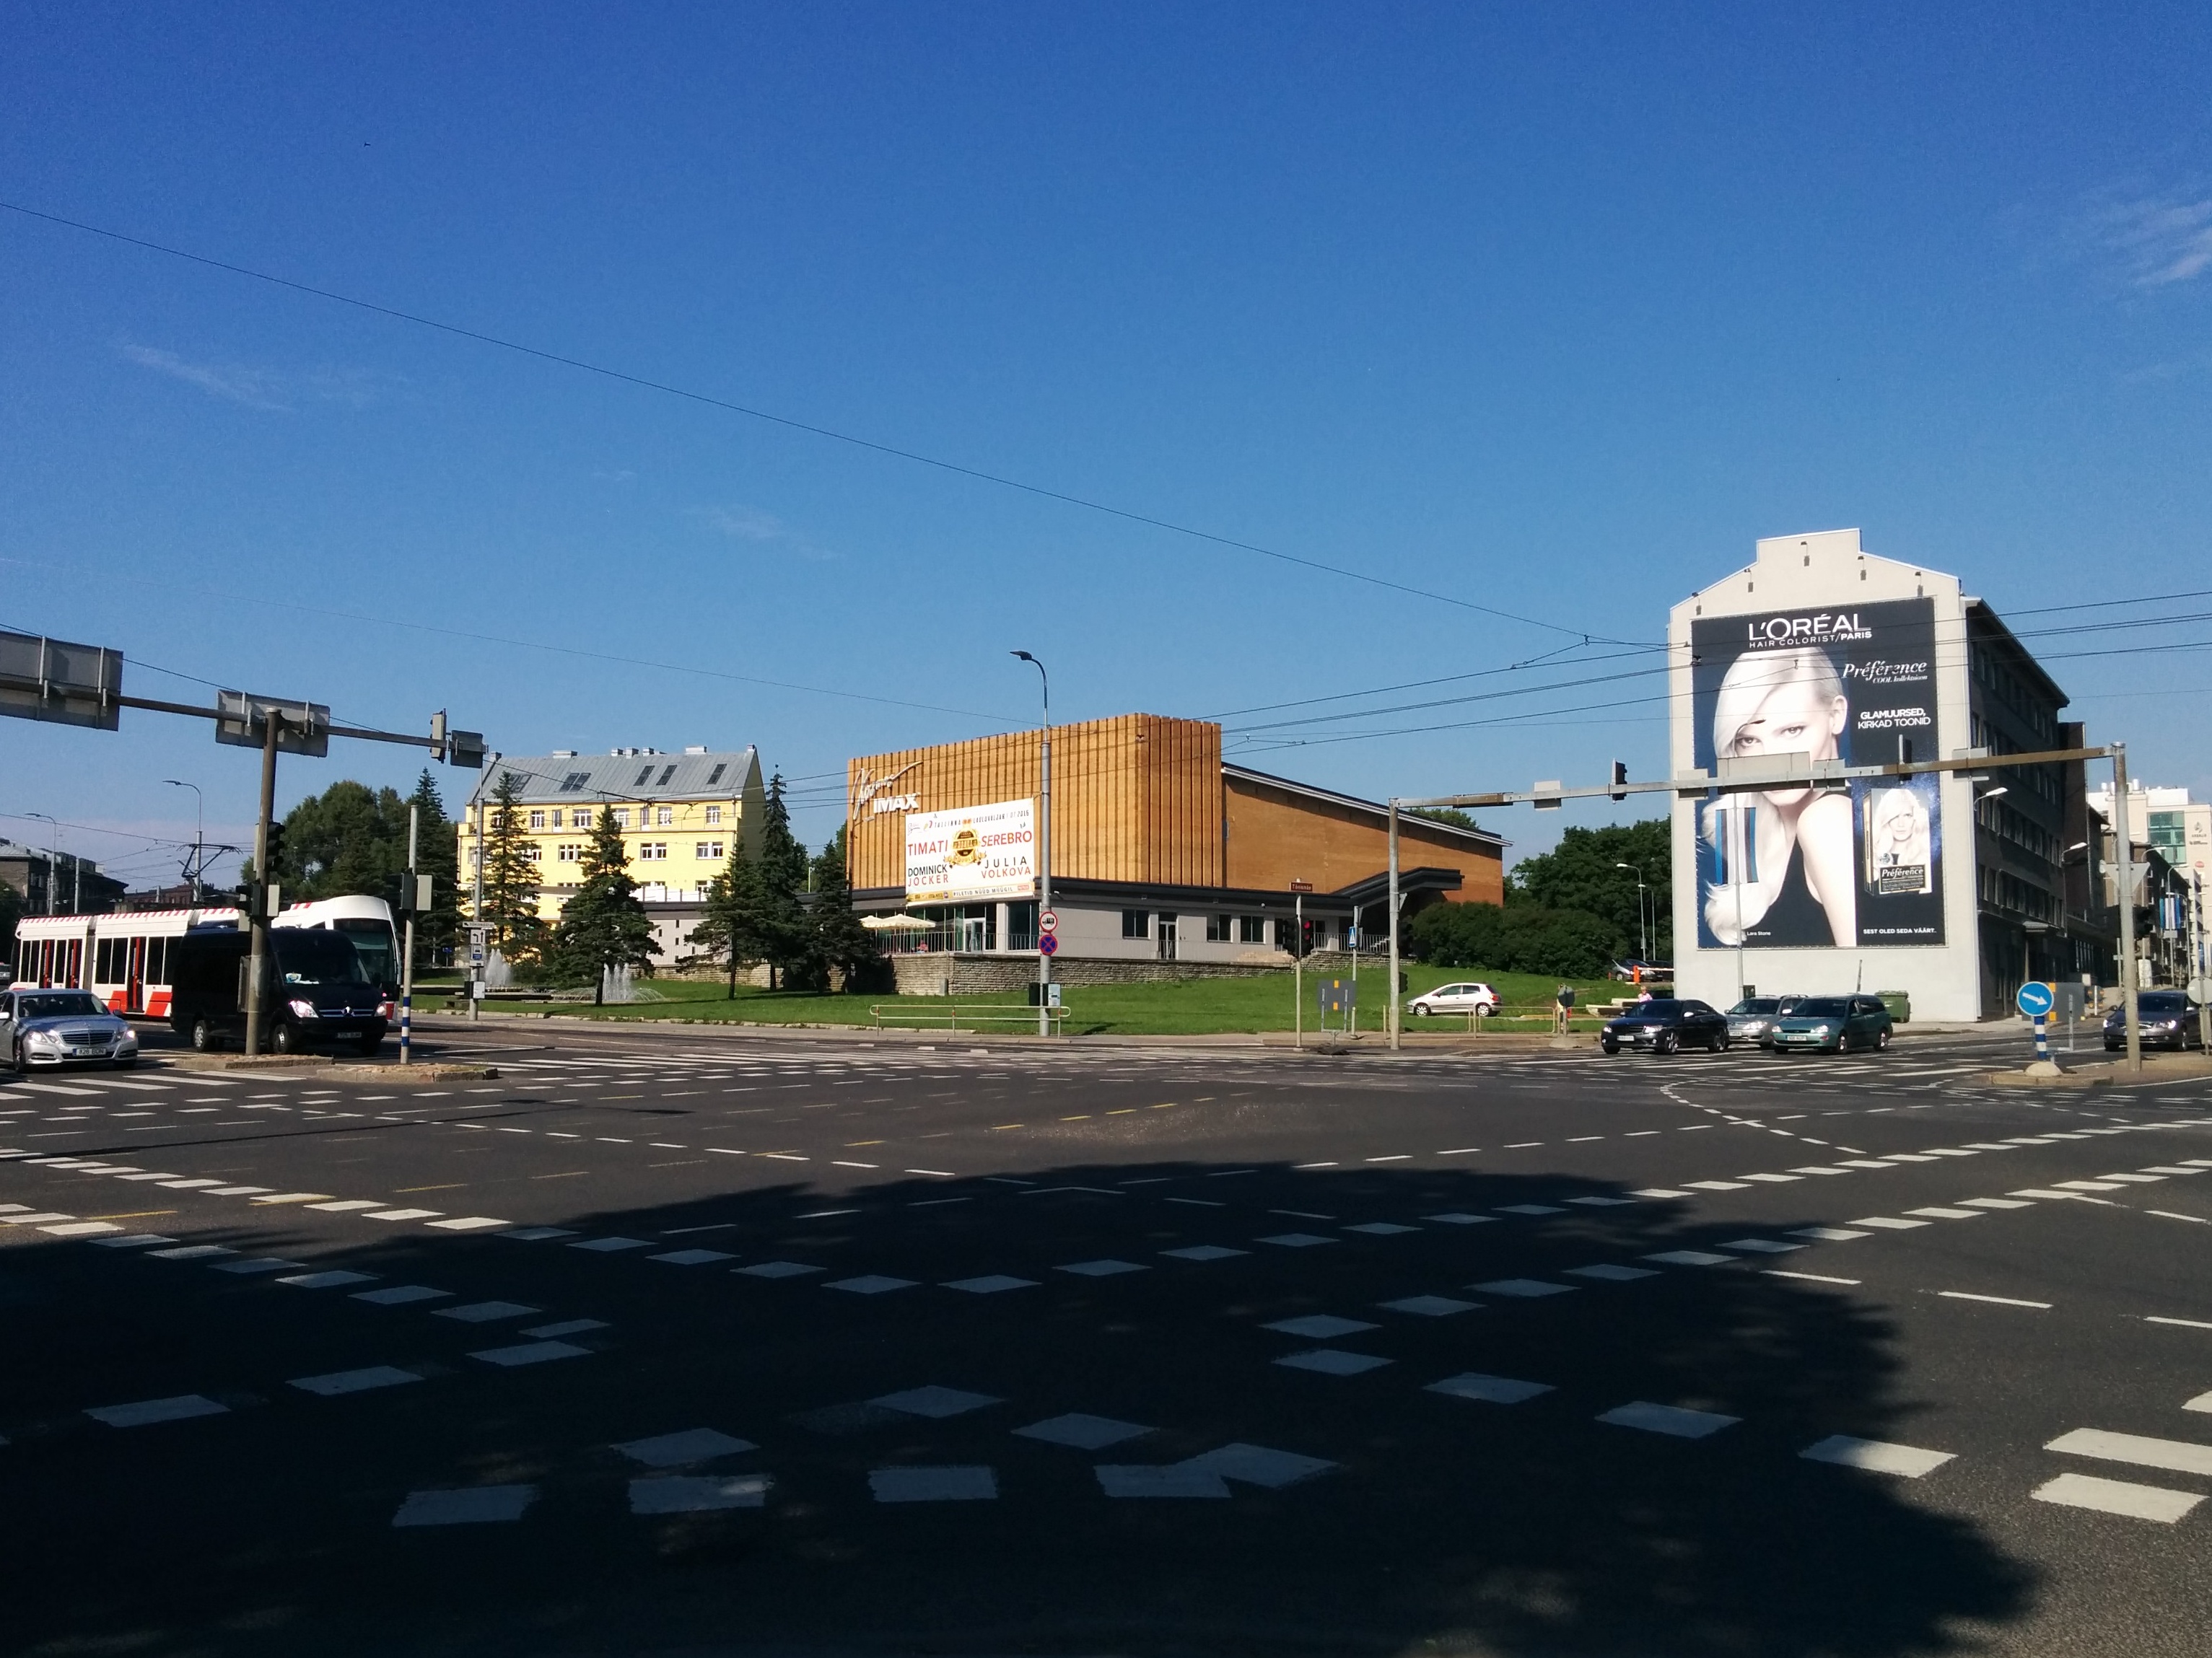 Pärnu highway in Tallinn rephoto